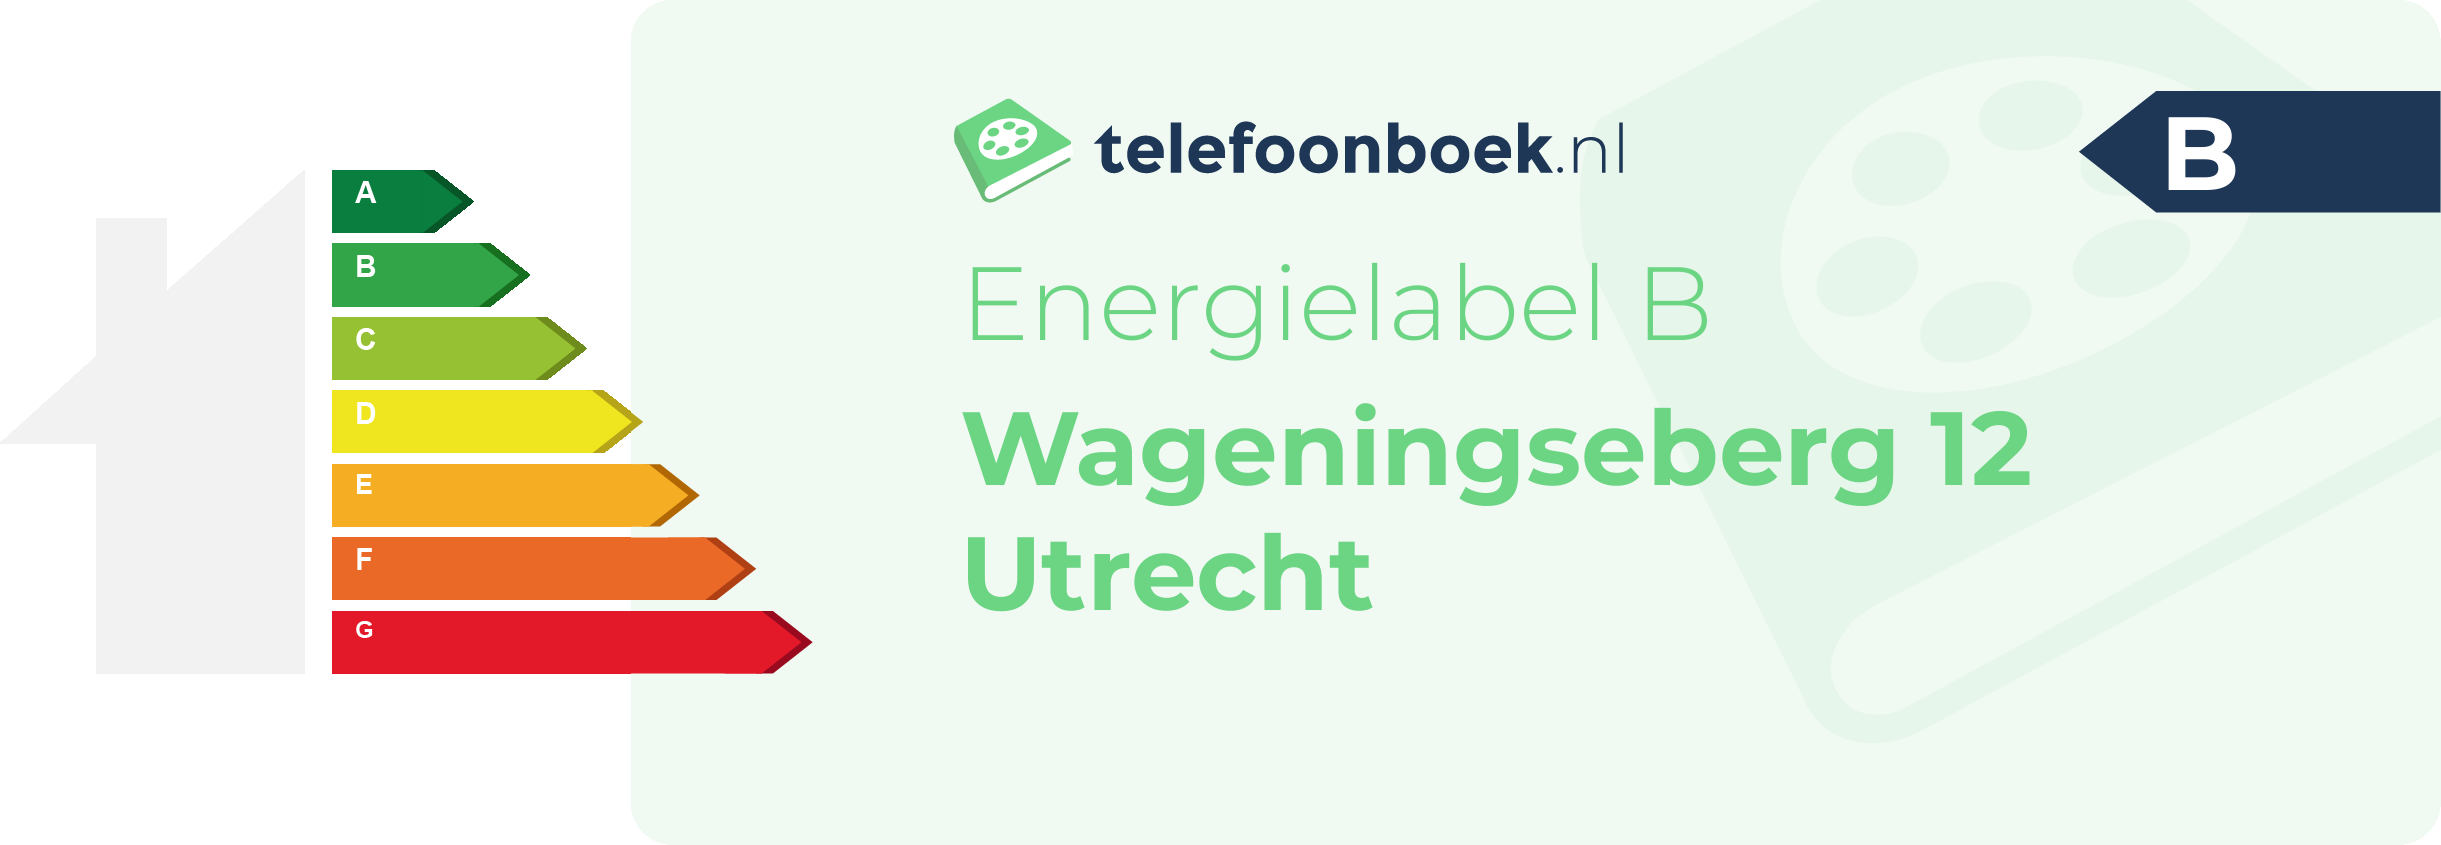 Energielabel Wageningseberg 12 Utrecht